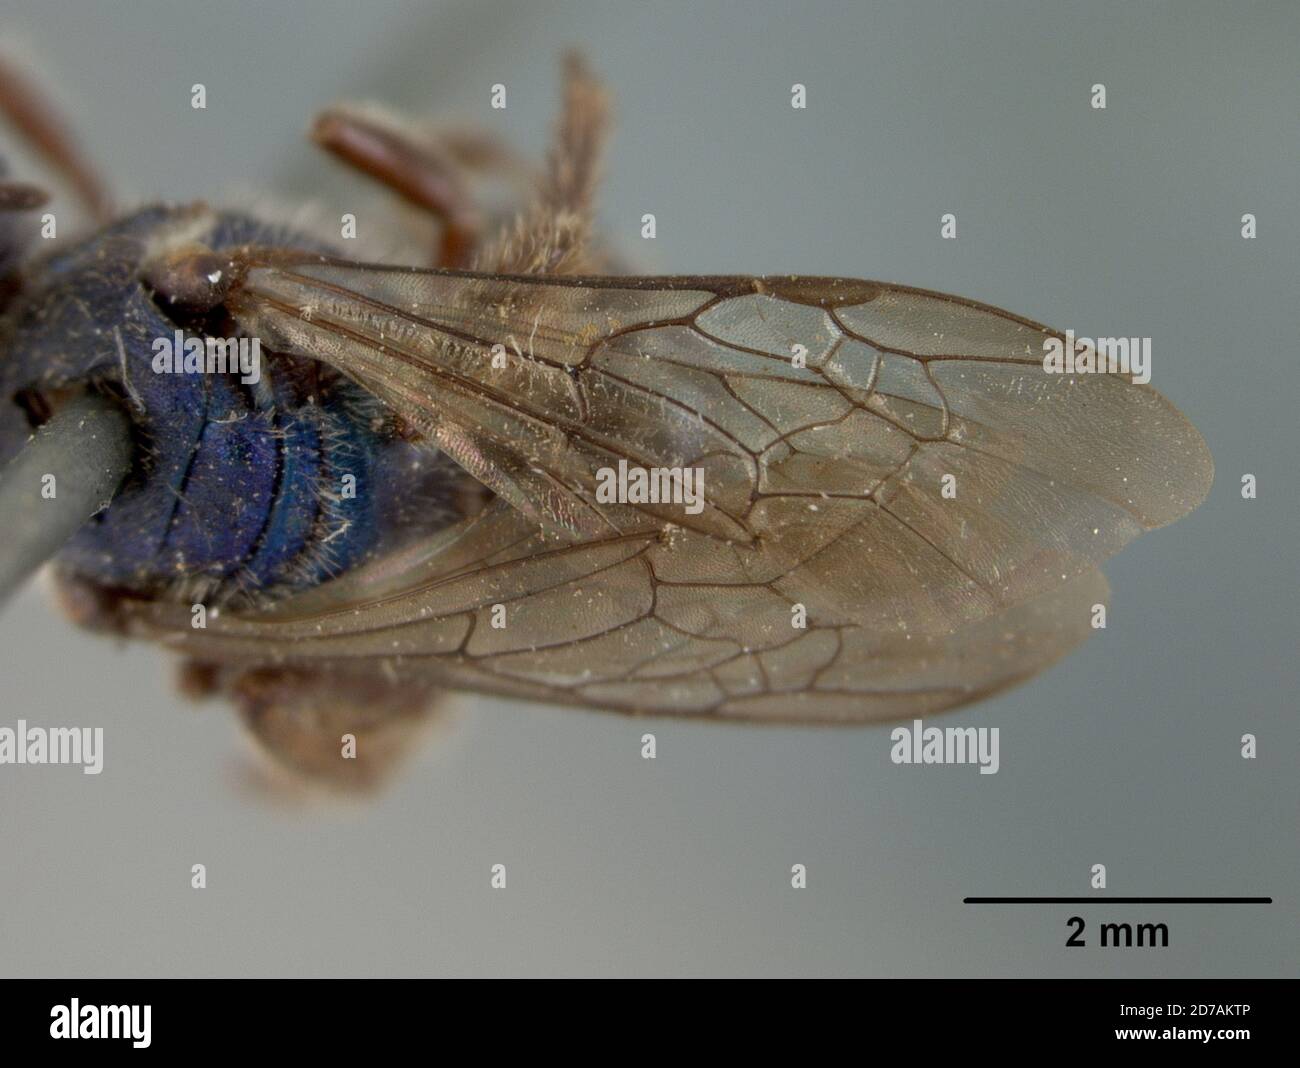 Pinned, Messico, Augochora nigrocyanea Cockerell, 1897, Animalia, Arthropoda, Insecta, Hymenoptera, Halictidae Foto Stock